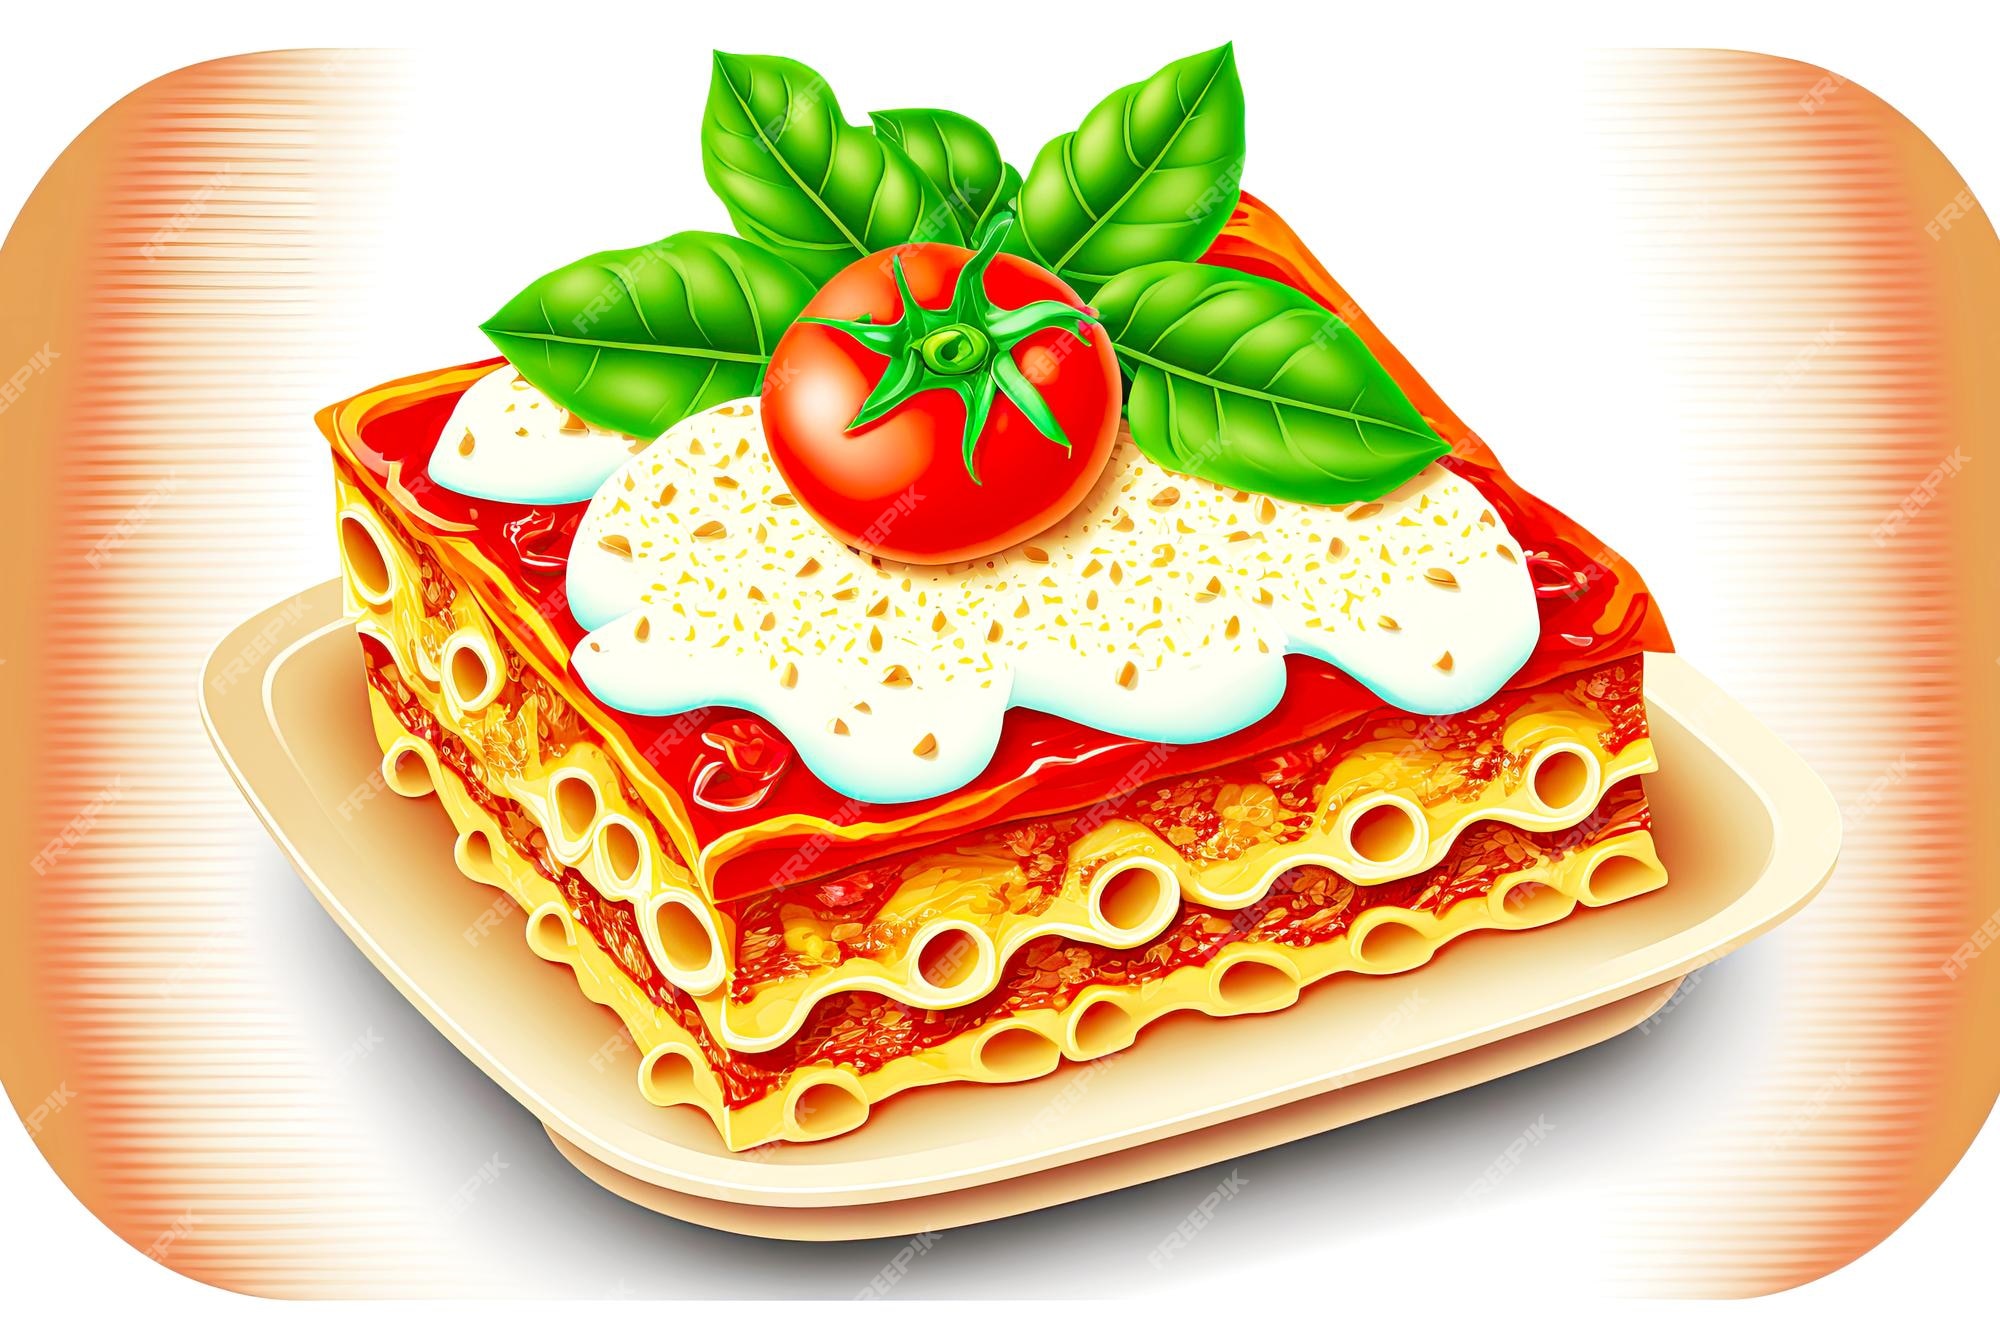 Premium Photo | Cheese lasagna in tomato sauce with meat italian dish